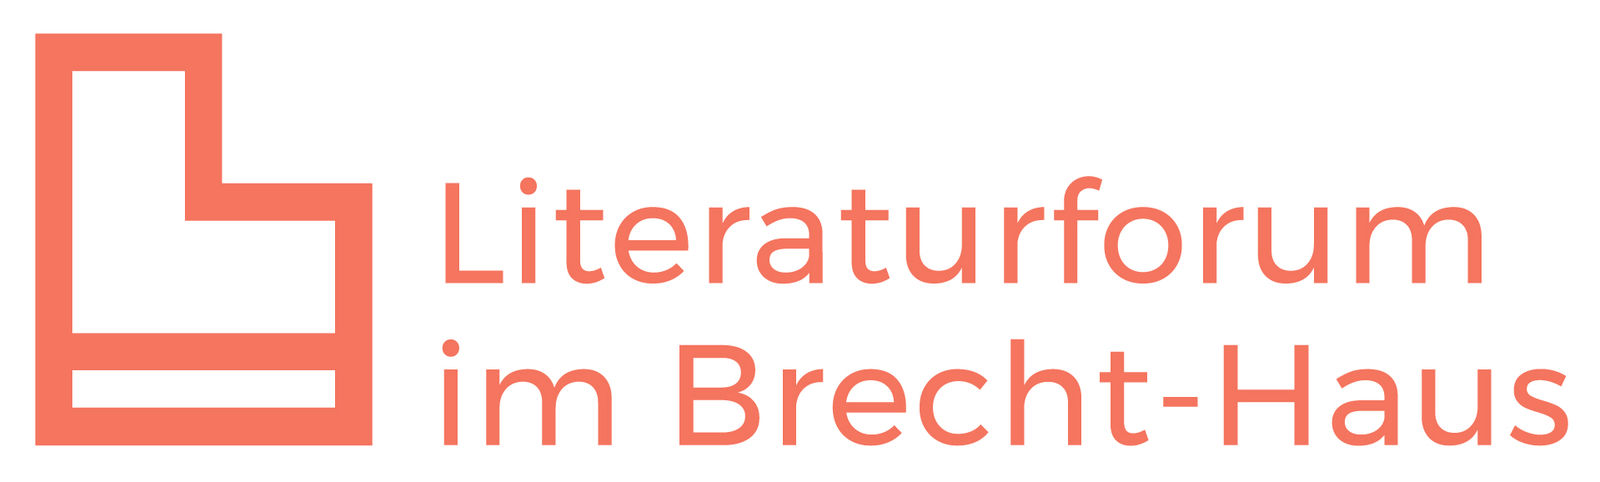 Logo Literaturforum Brechthaus